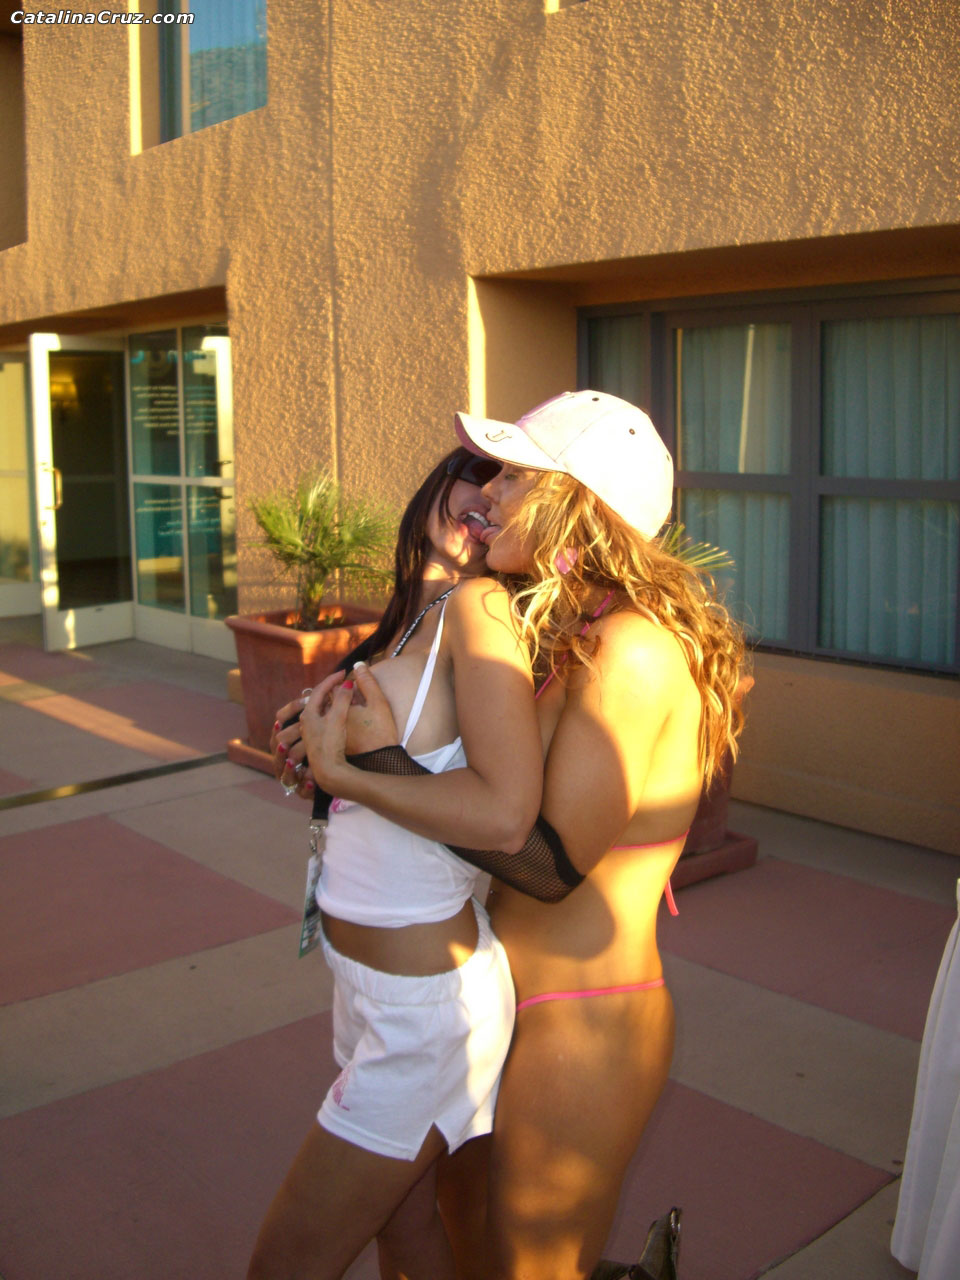 Hot pornstar Catalina Cruz poses with her friends & flashes her tits in public porno fotoğrafı #425104896 | Catalina Cruz Pics, Catalina Cruz, Public, mobil porno